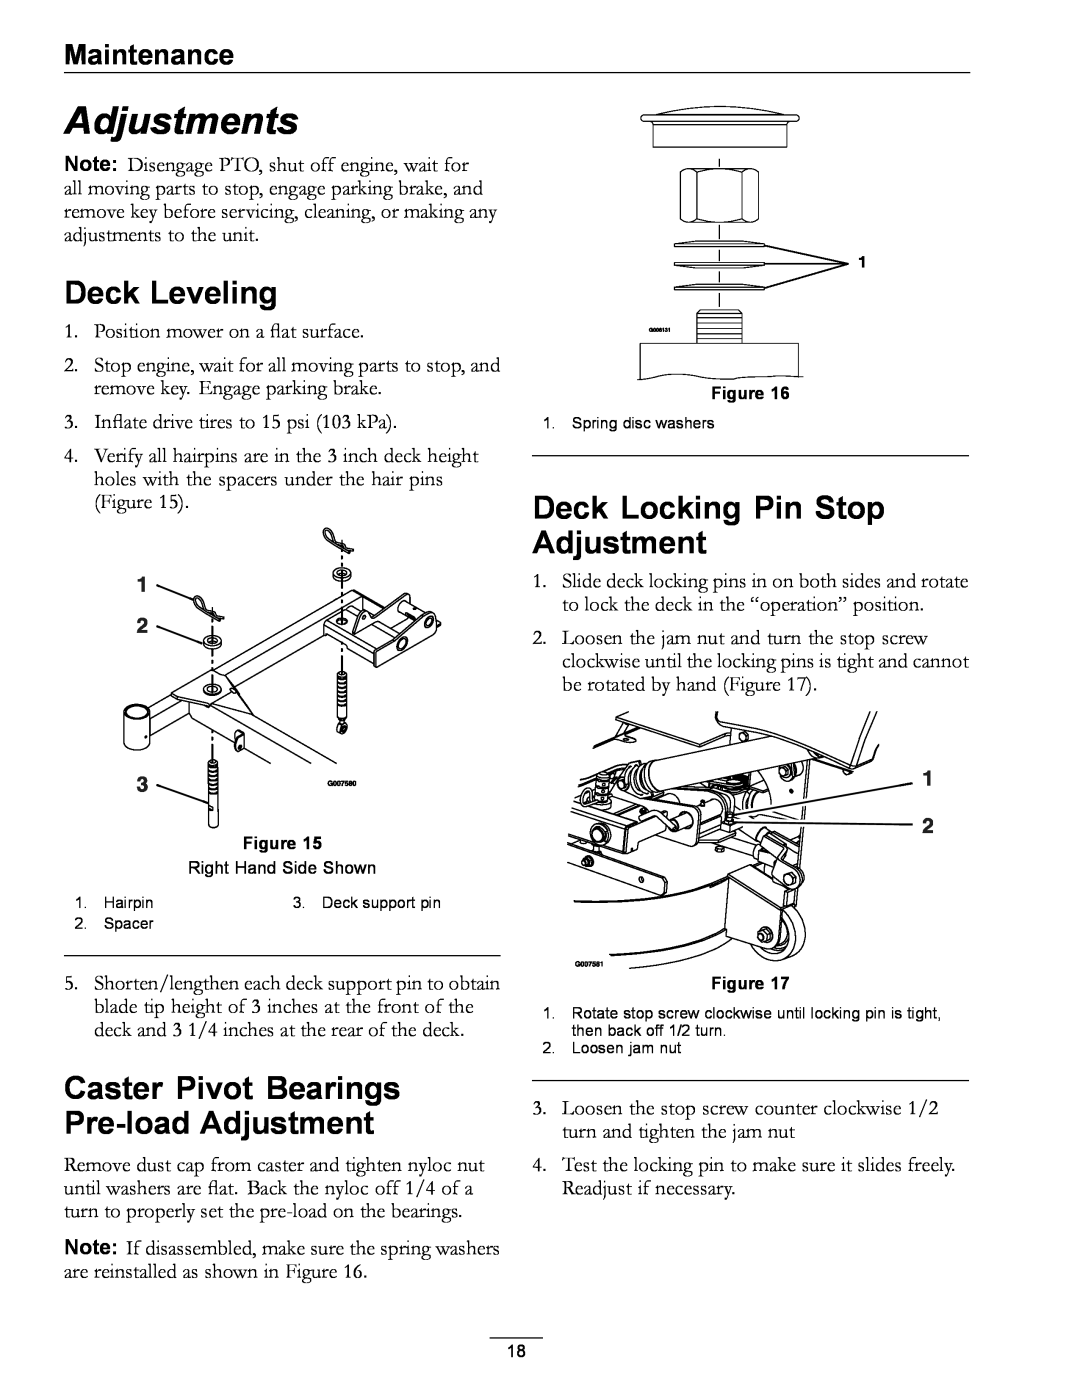 Exmark 4500-370 Adjustments, Deck Leveling, Deck Locking Pin Stop Adjustment, Caster Pivot Bearings Pre-loadAdjustment 